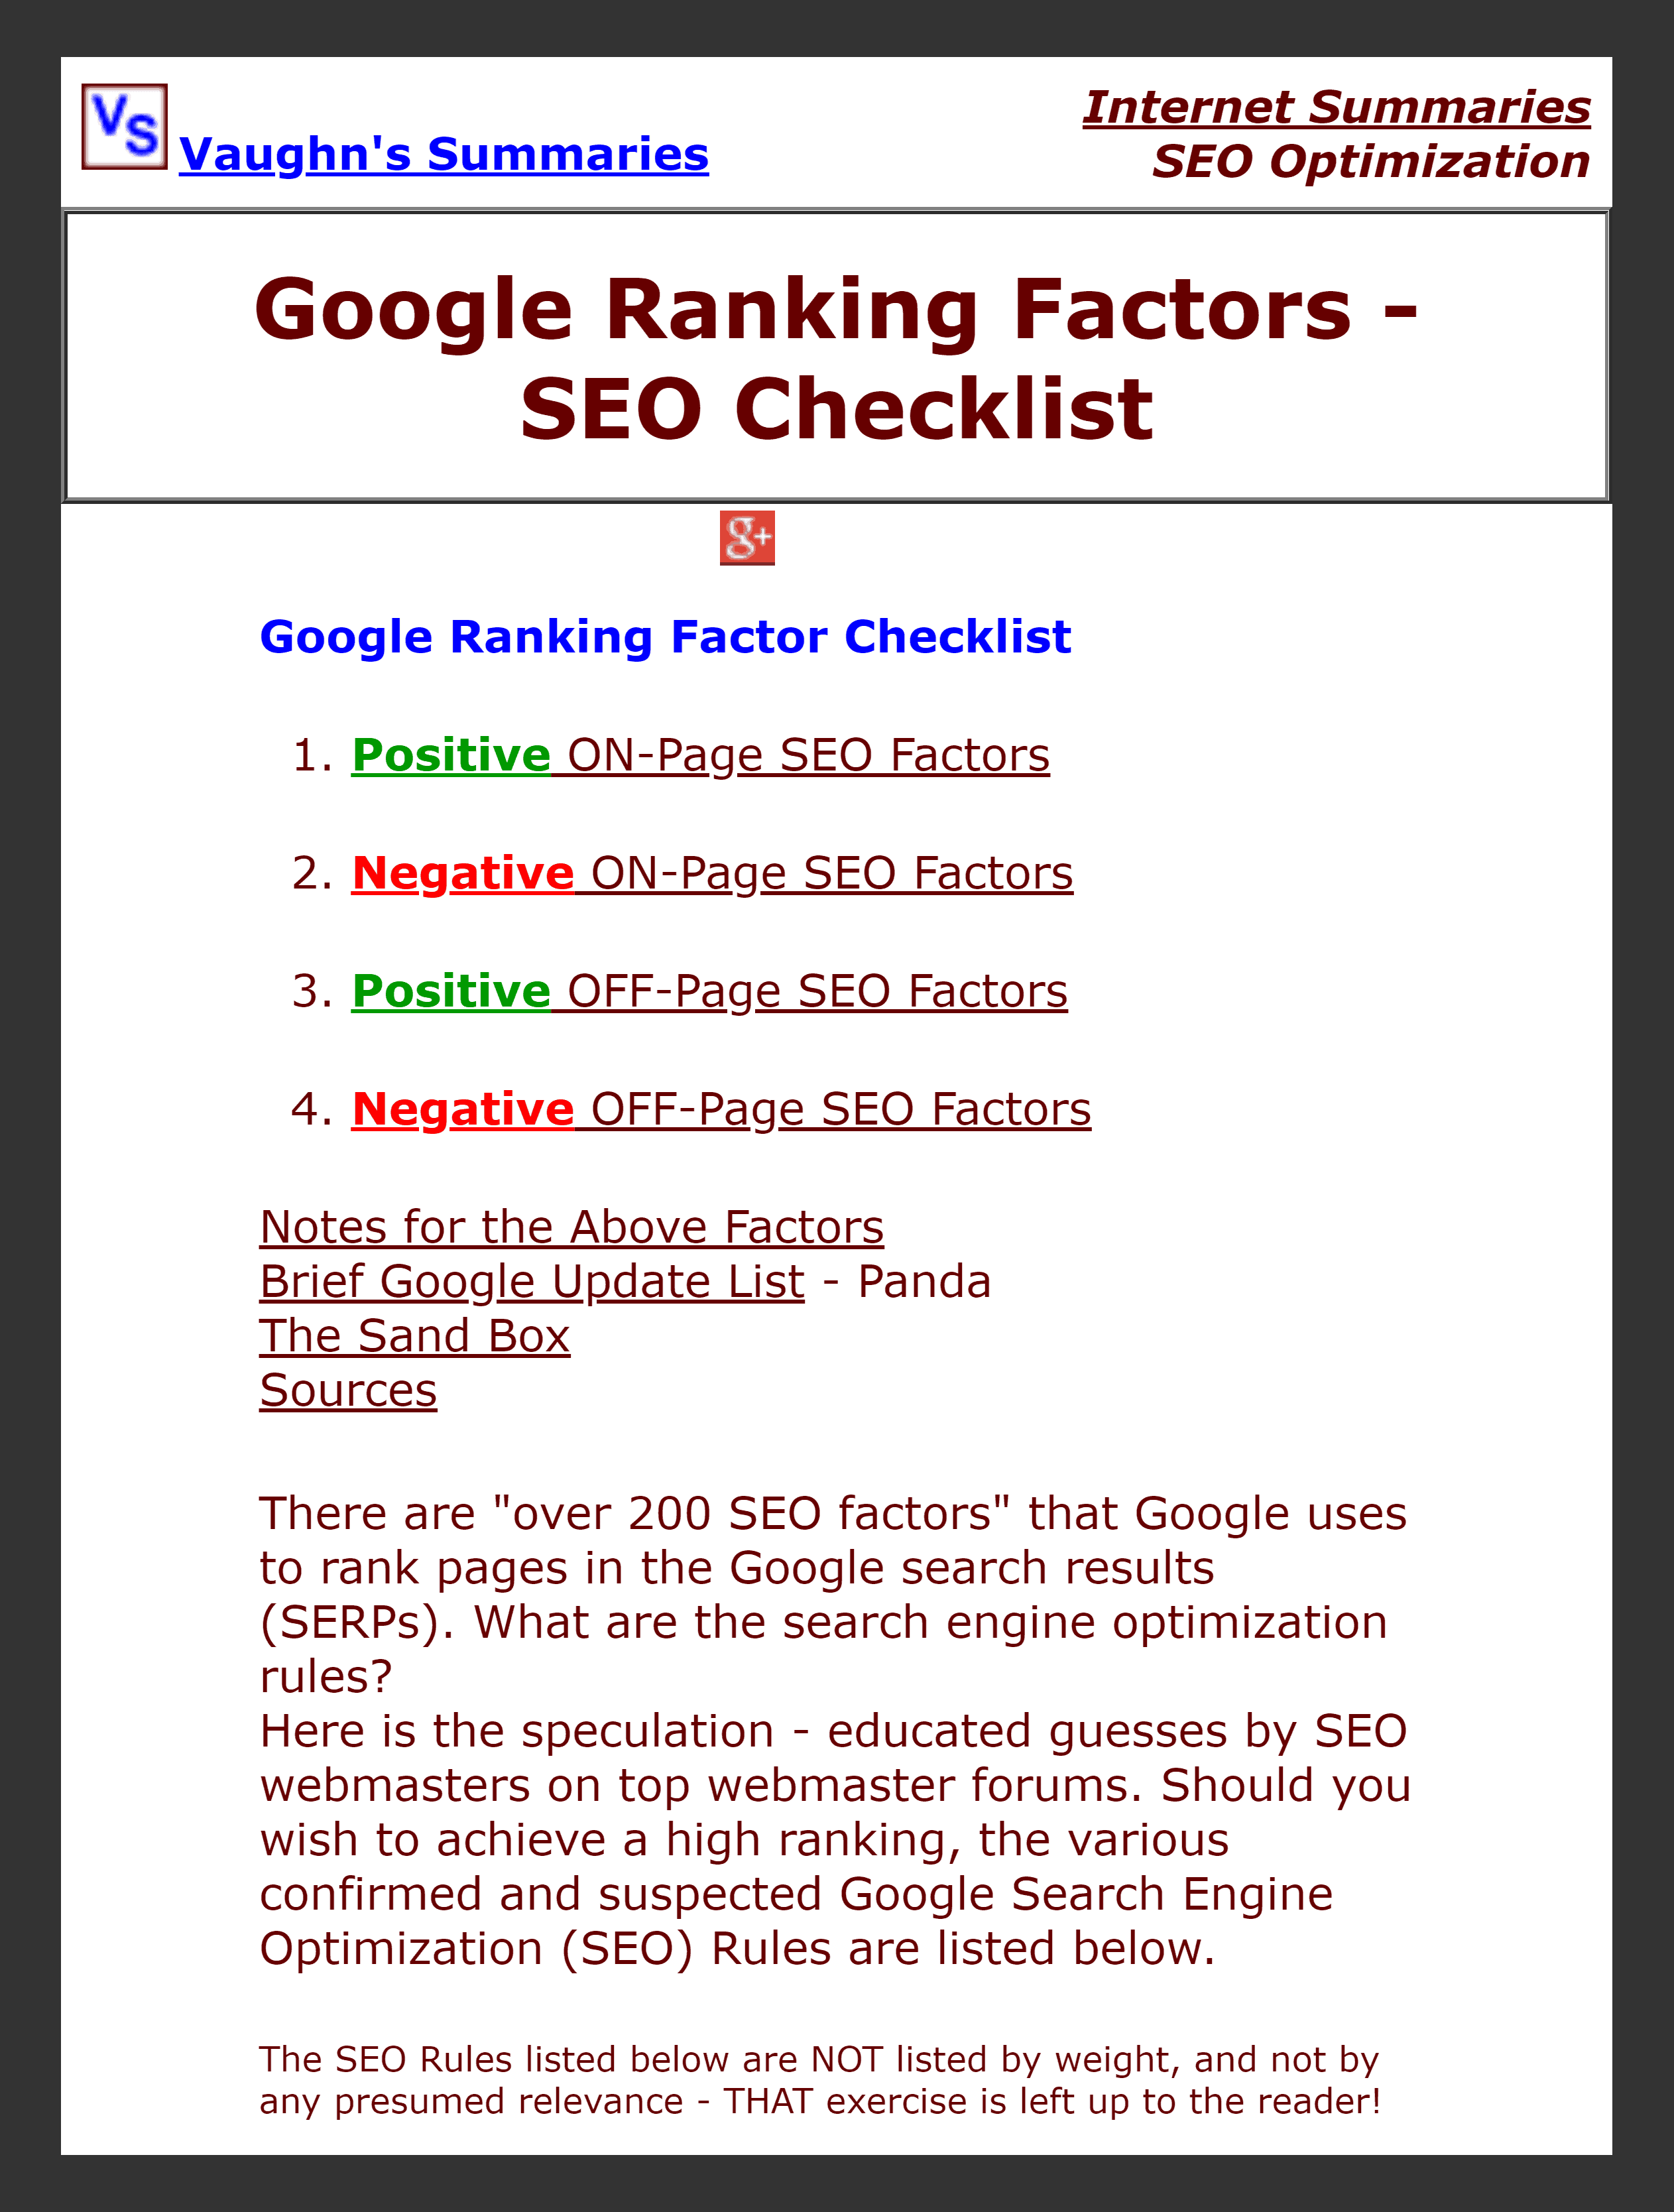 Vaughn's – Google ranking factors